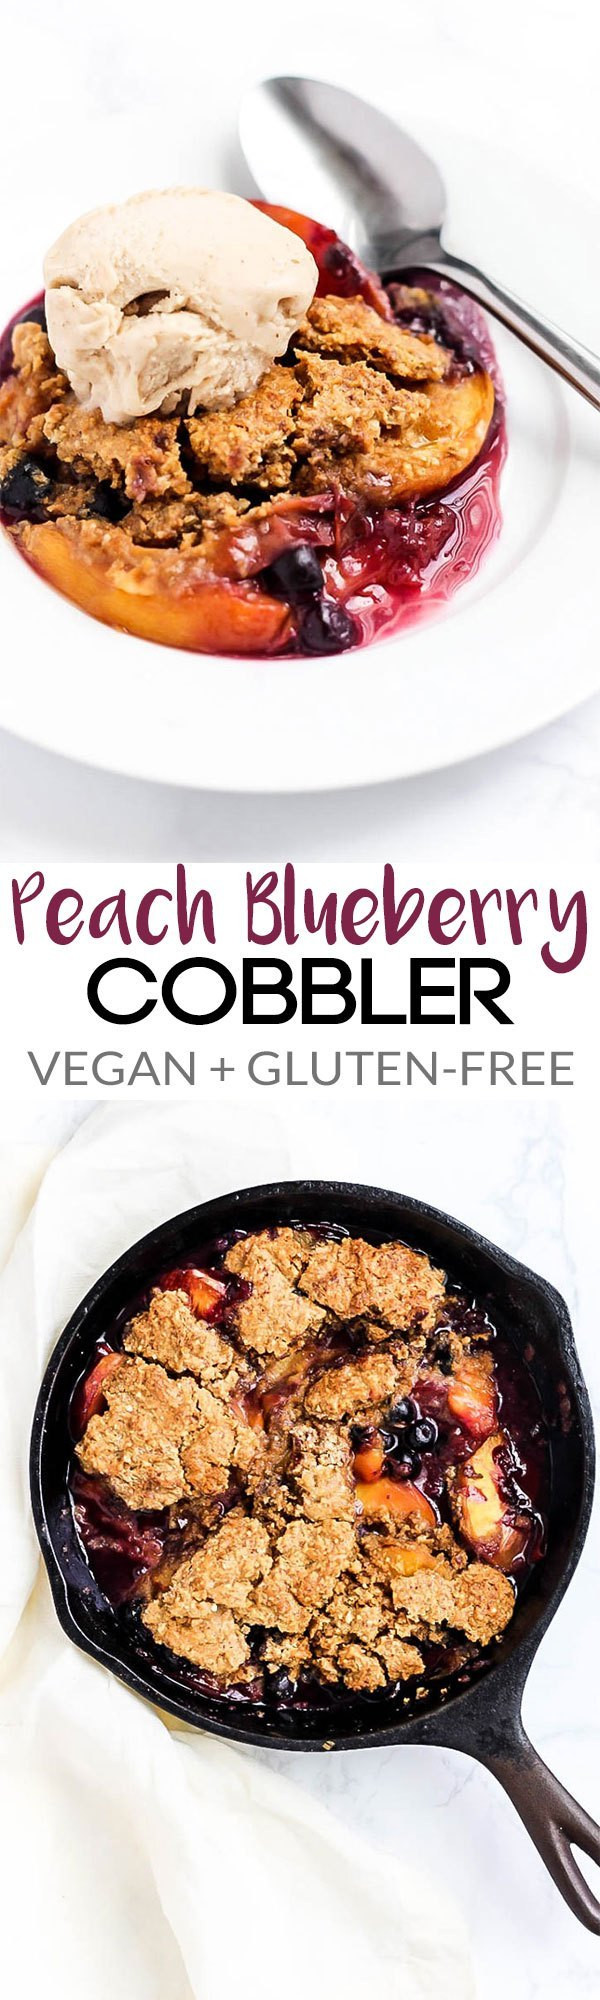 Peach Cobbler Gluten Free
 Vegan Peach Blueberry Cobbler gluten free